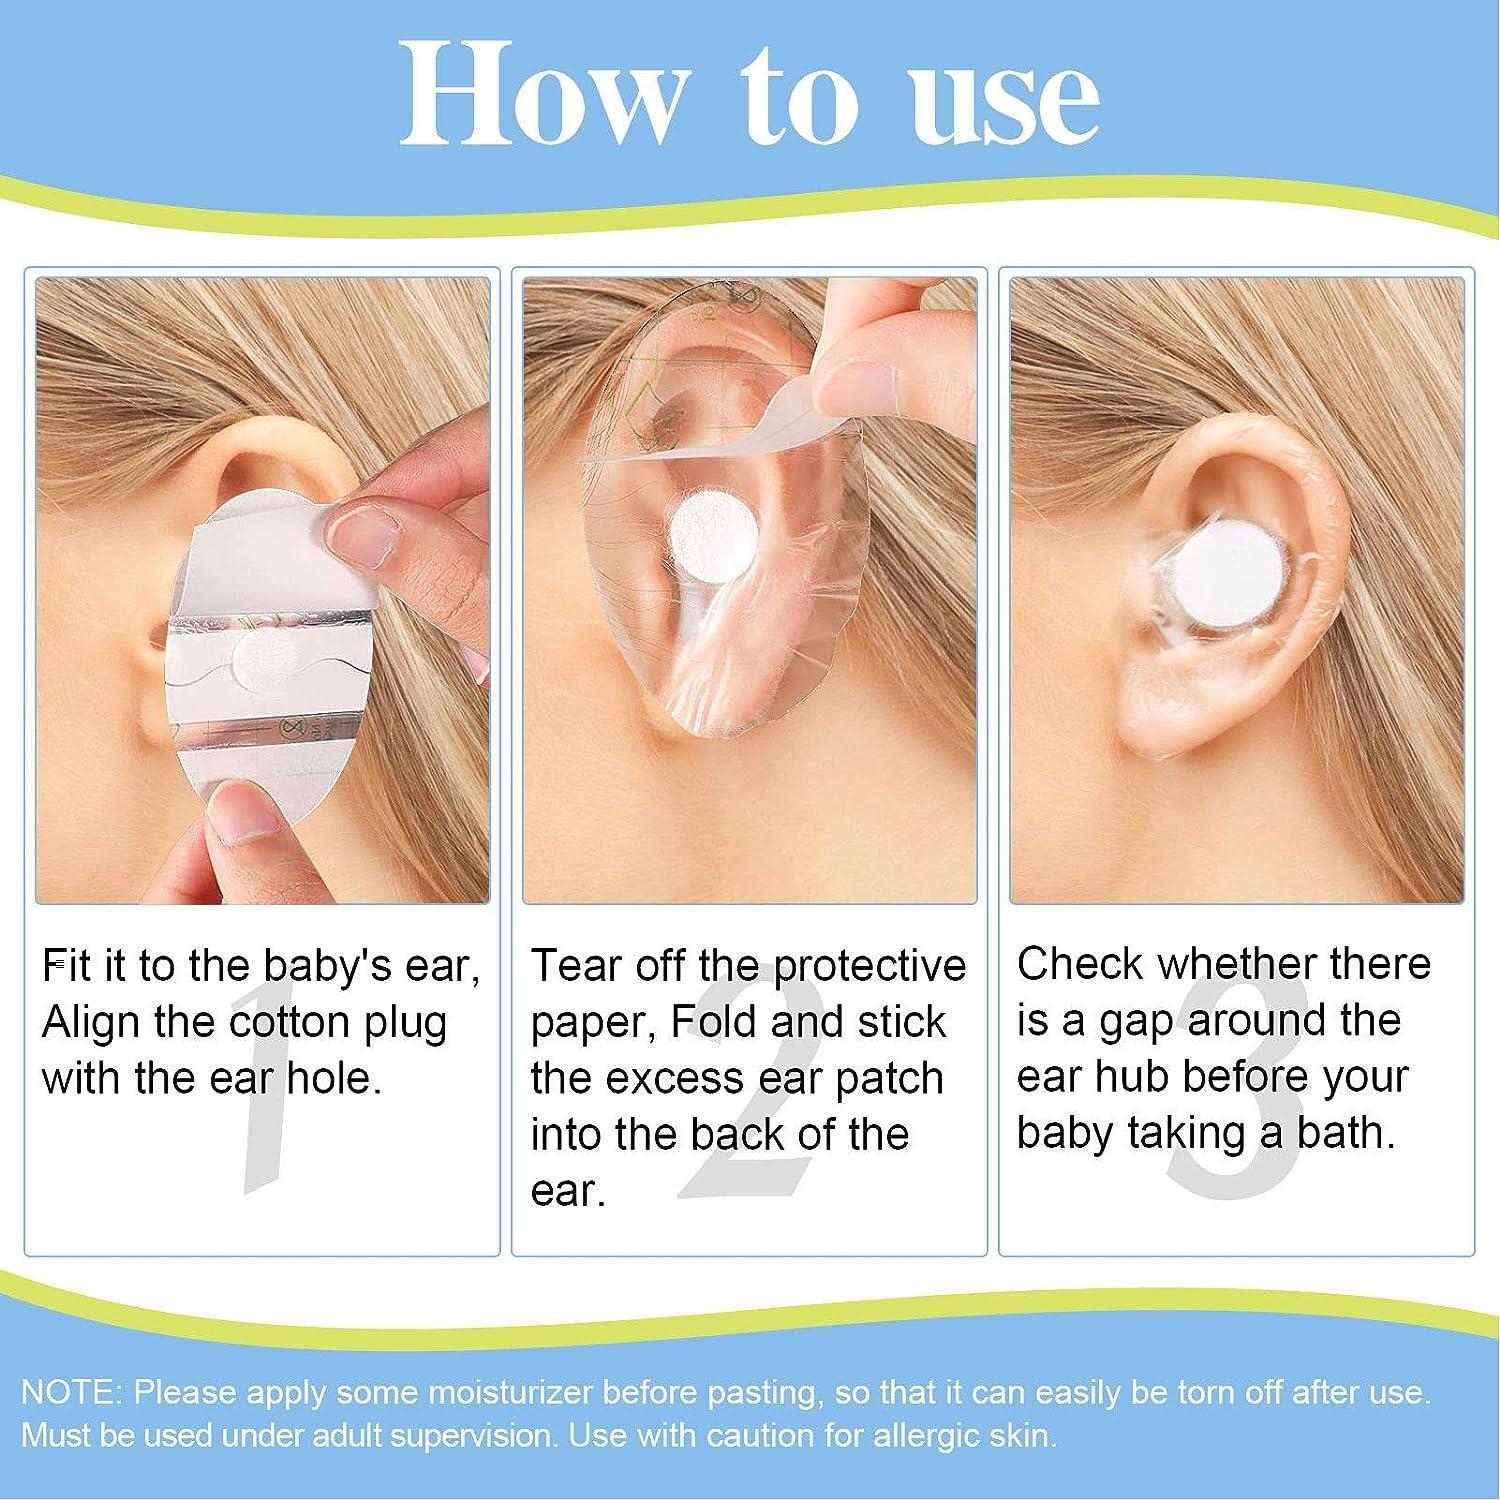 Waterproof Pu Membrane, Invisible Ear Stickers, Swimming Ear